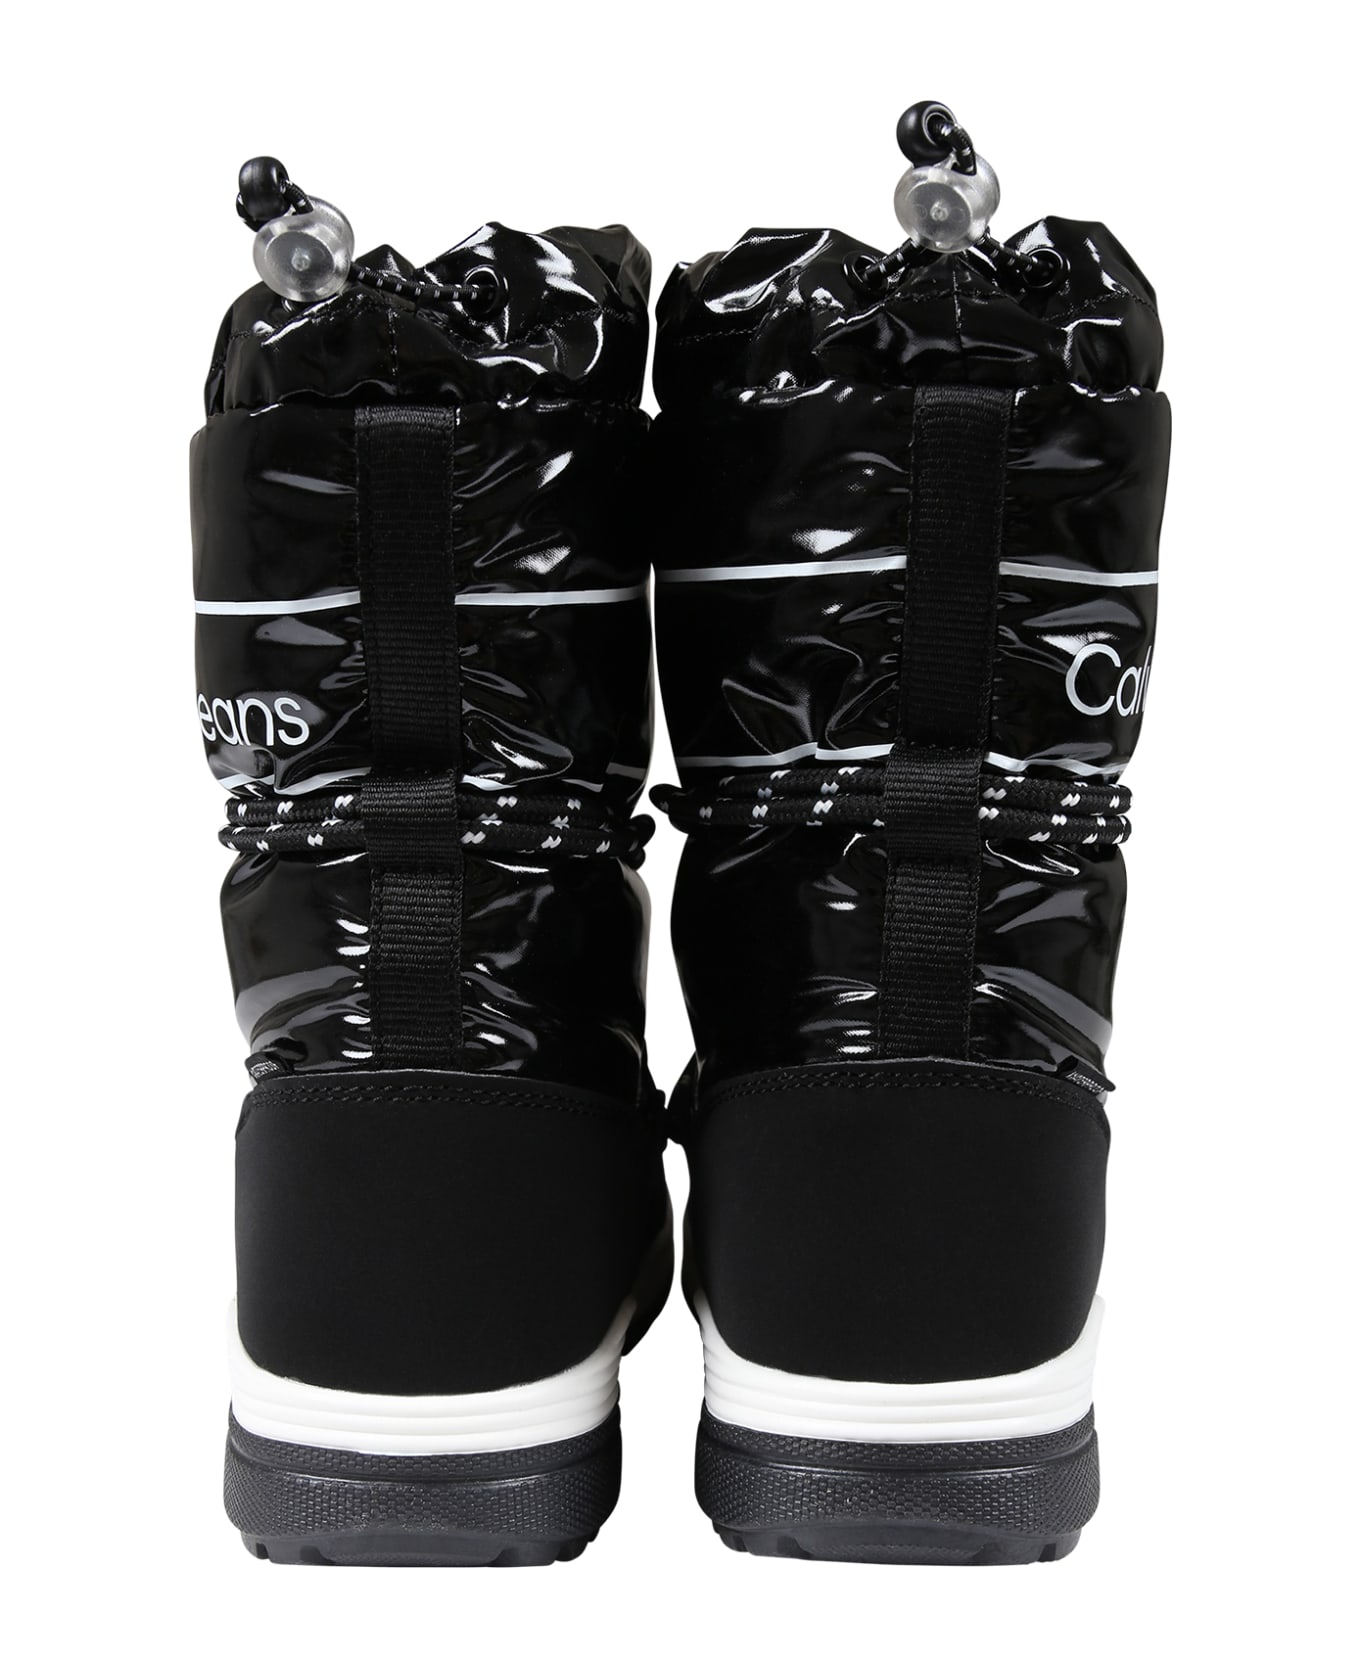 Calvin Klein Black Snow Boots For Girl With Logo - Black